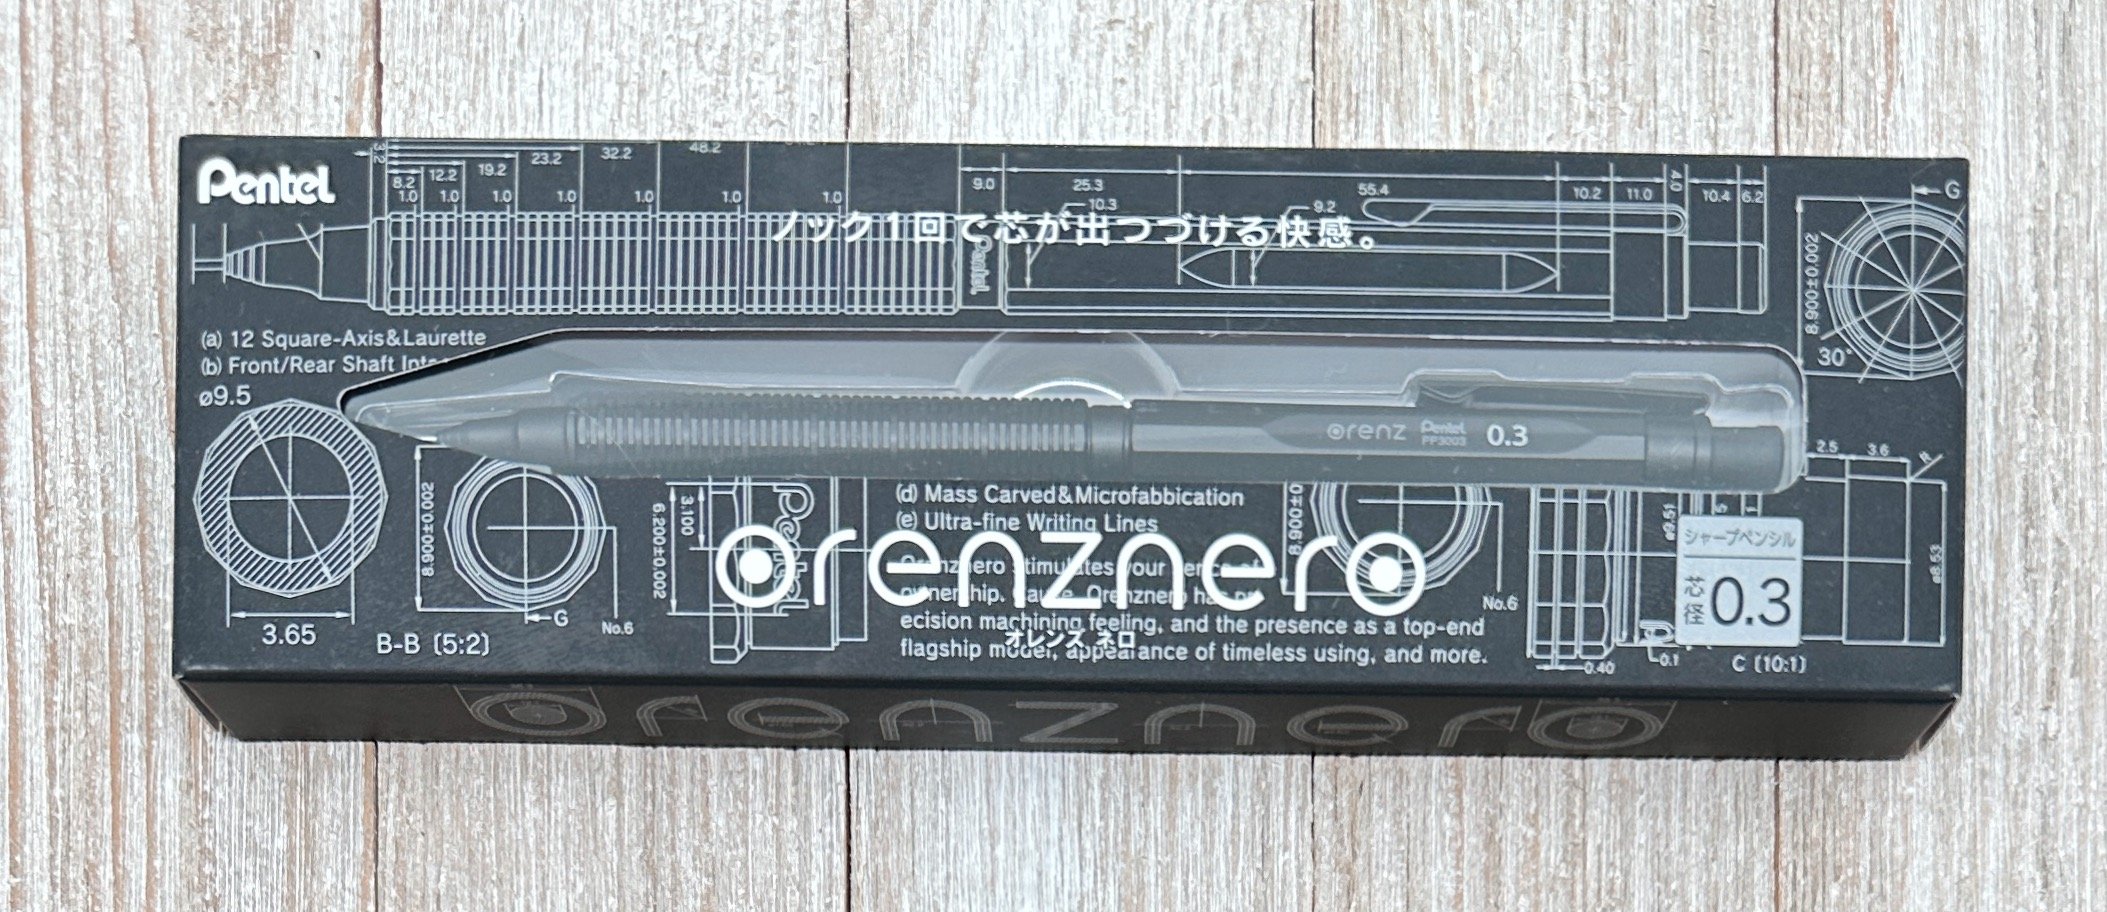 Pentel Orenz Mechanical Pencil - Metal Grip - 0.2 mm - Black